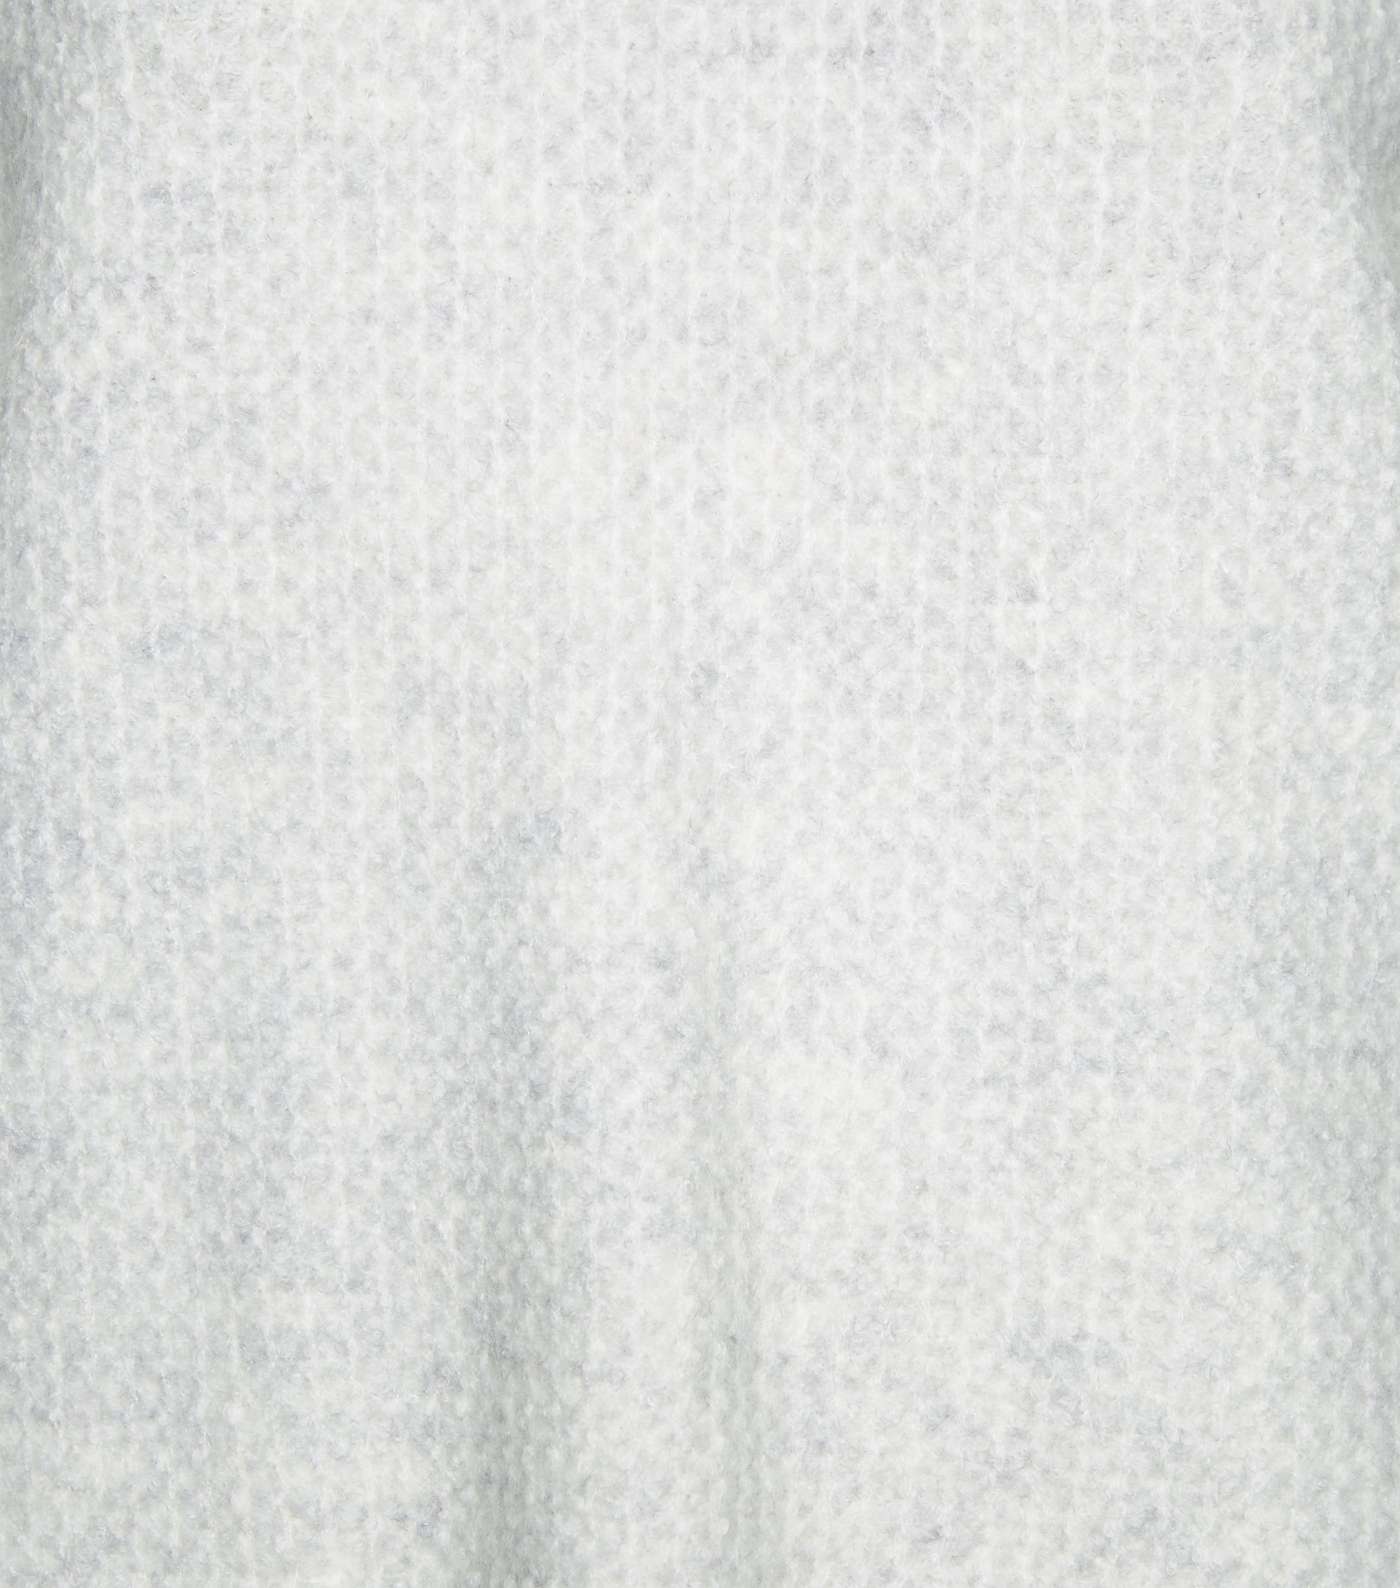 Pale Grey Stitch Knit High Neck Jumper Image 6